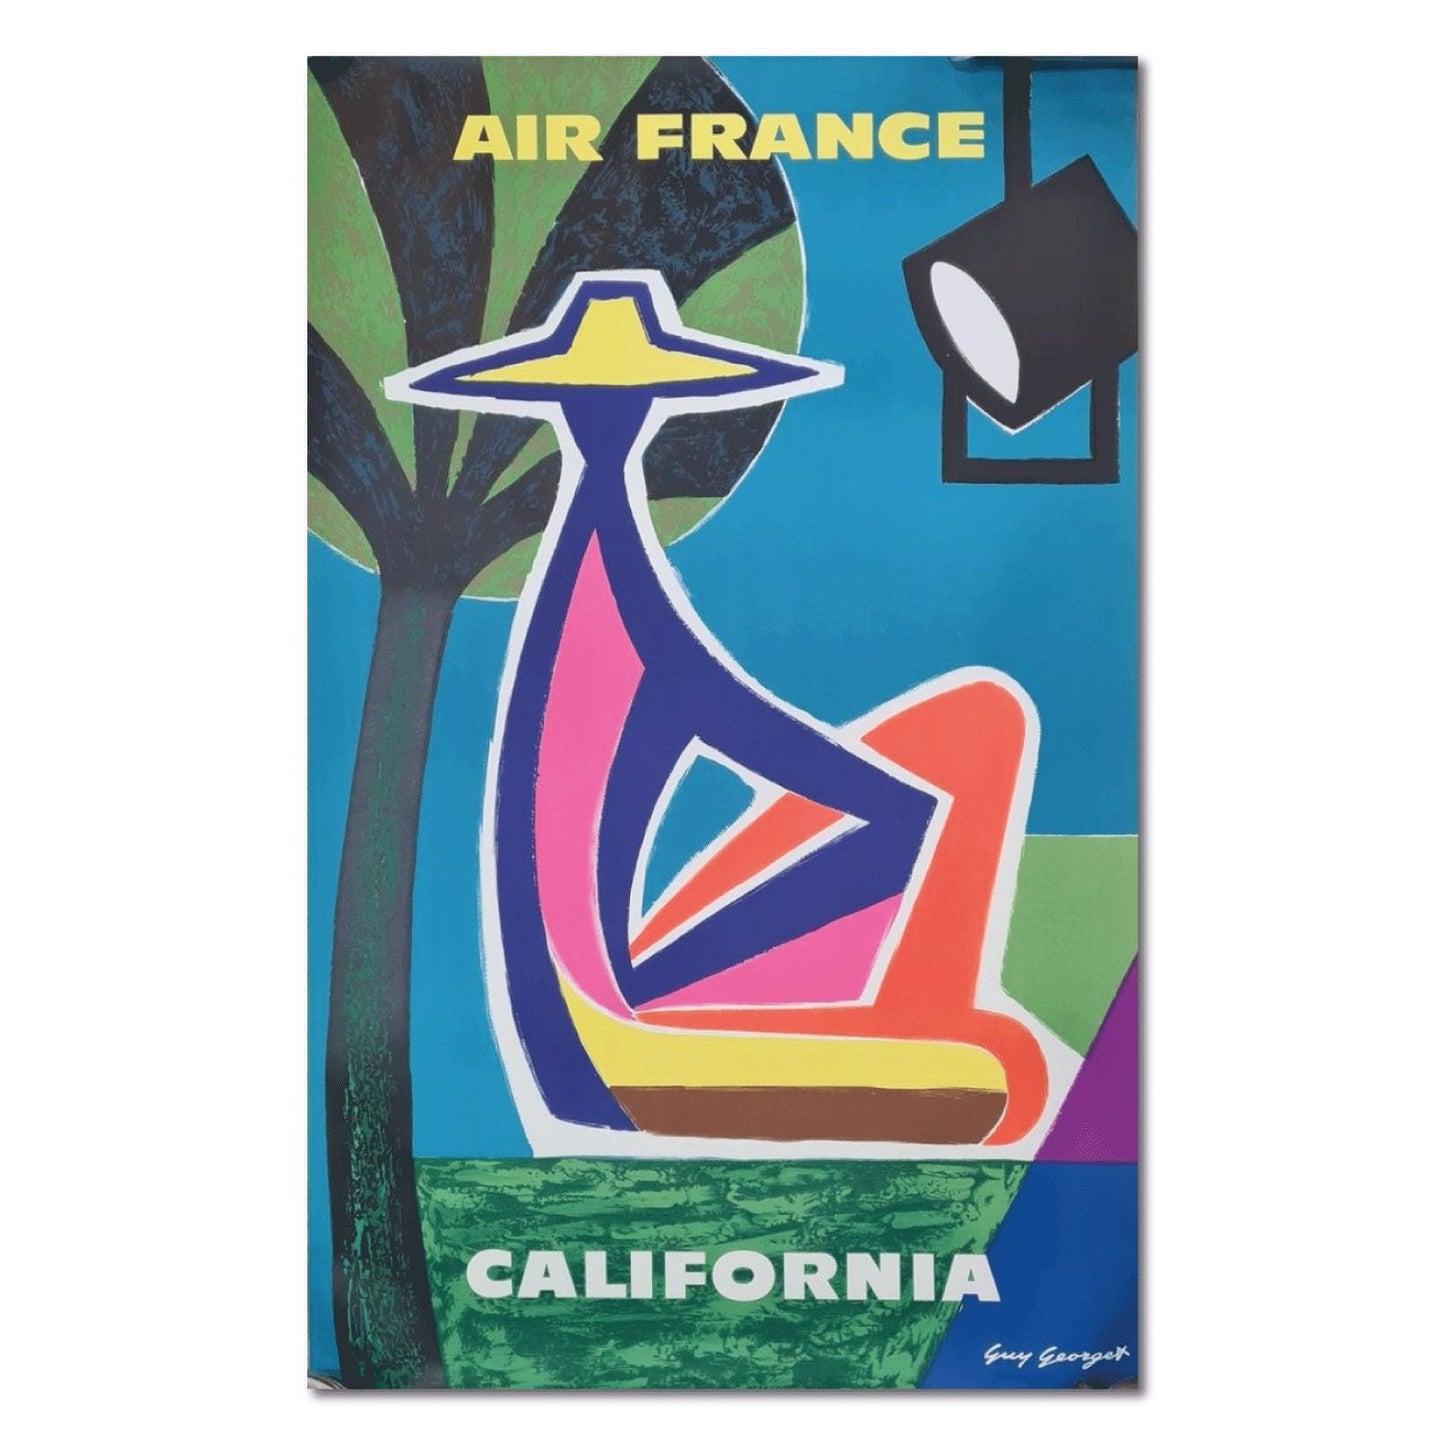 Air France California - Affiche ancienne de Guy Georget 1961 - Studio Monet